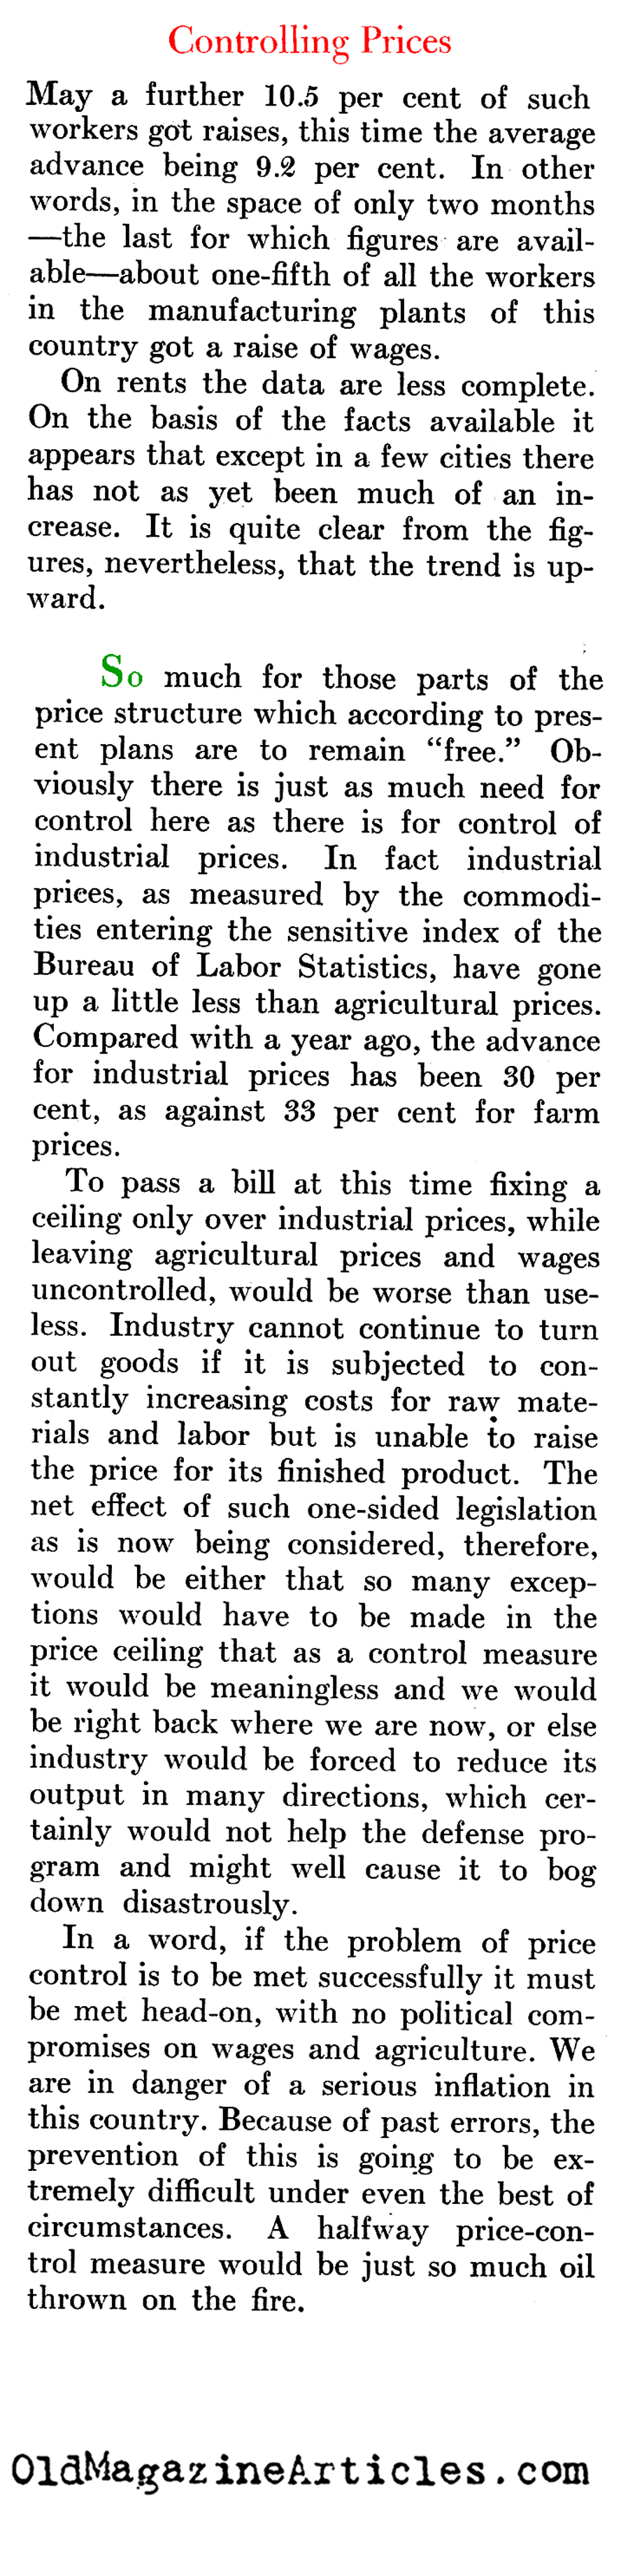 New Deal Price Controls (Newsweek Magazine, 1941)